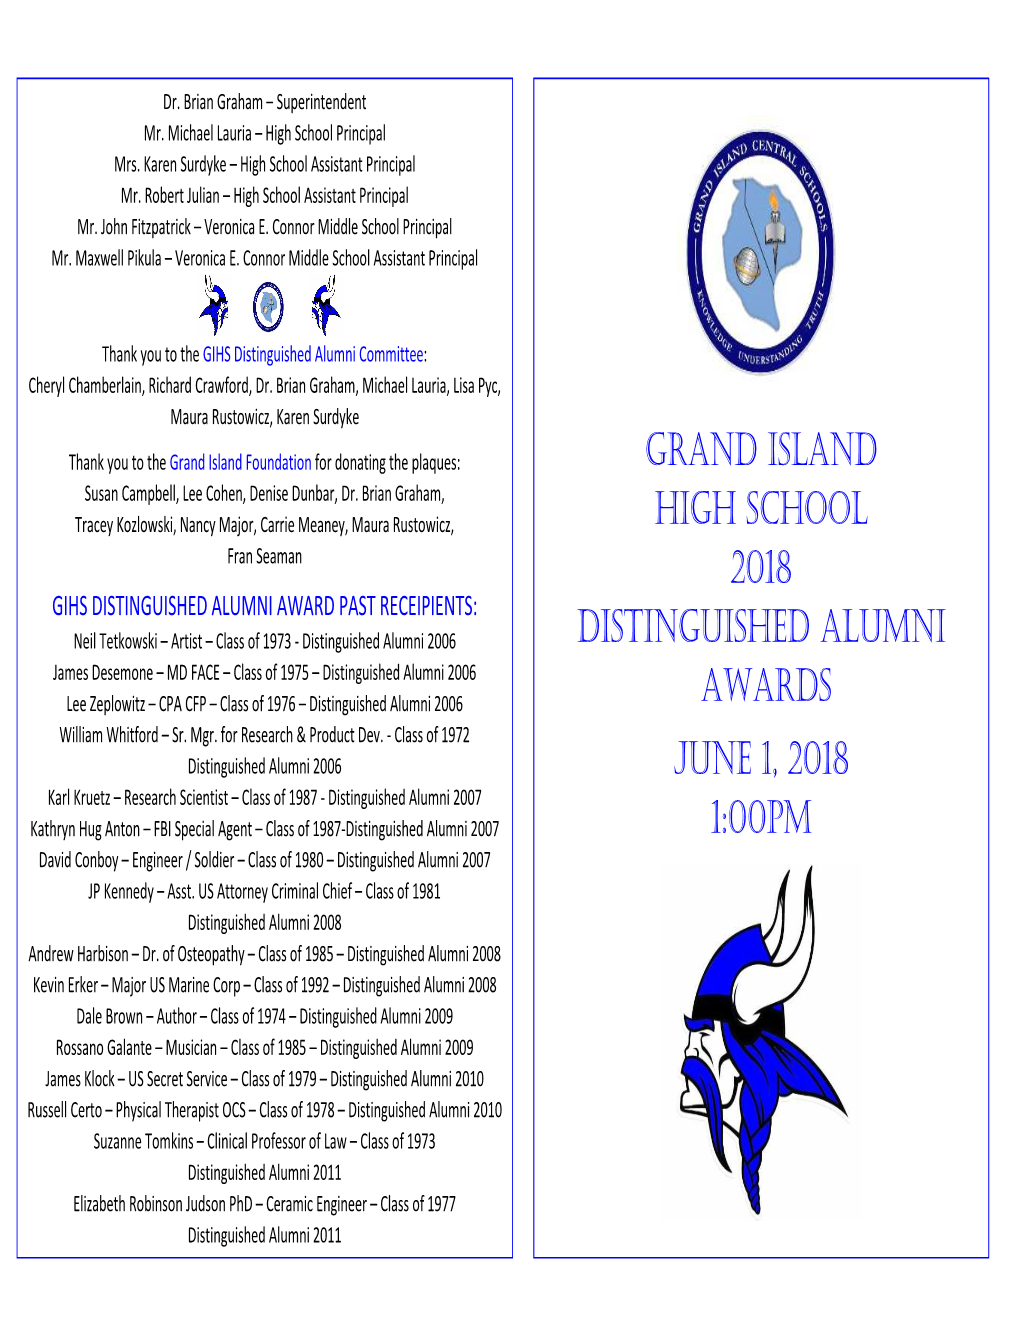 Grand Island High School 2018 Distinguished Alumni